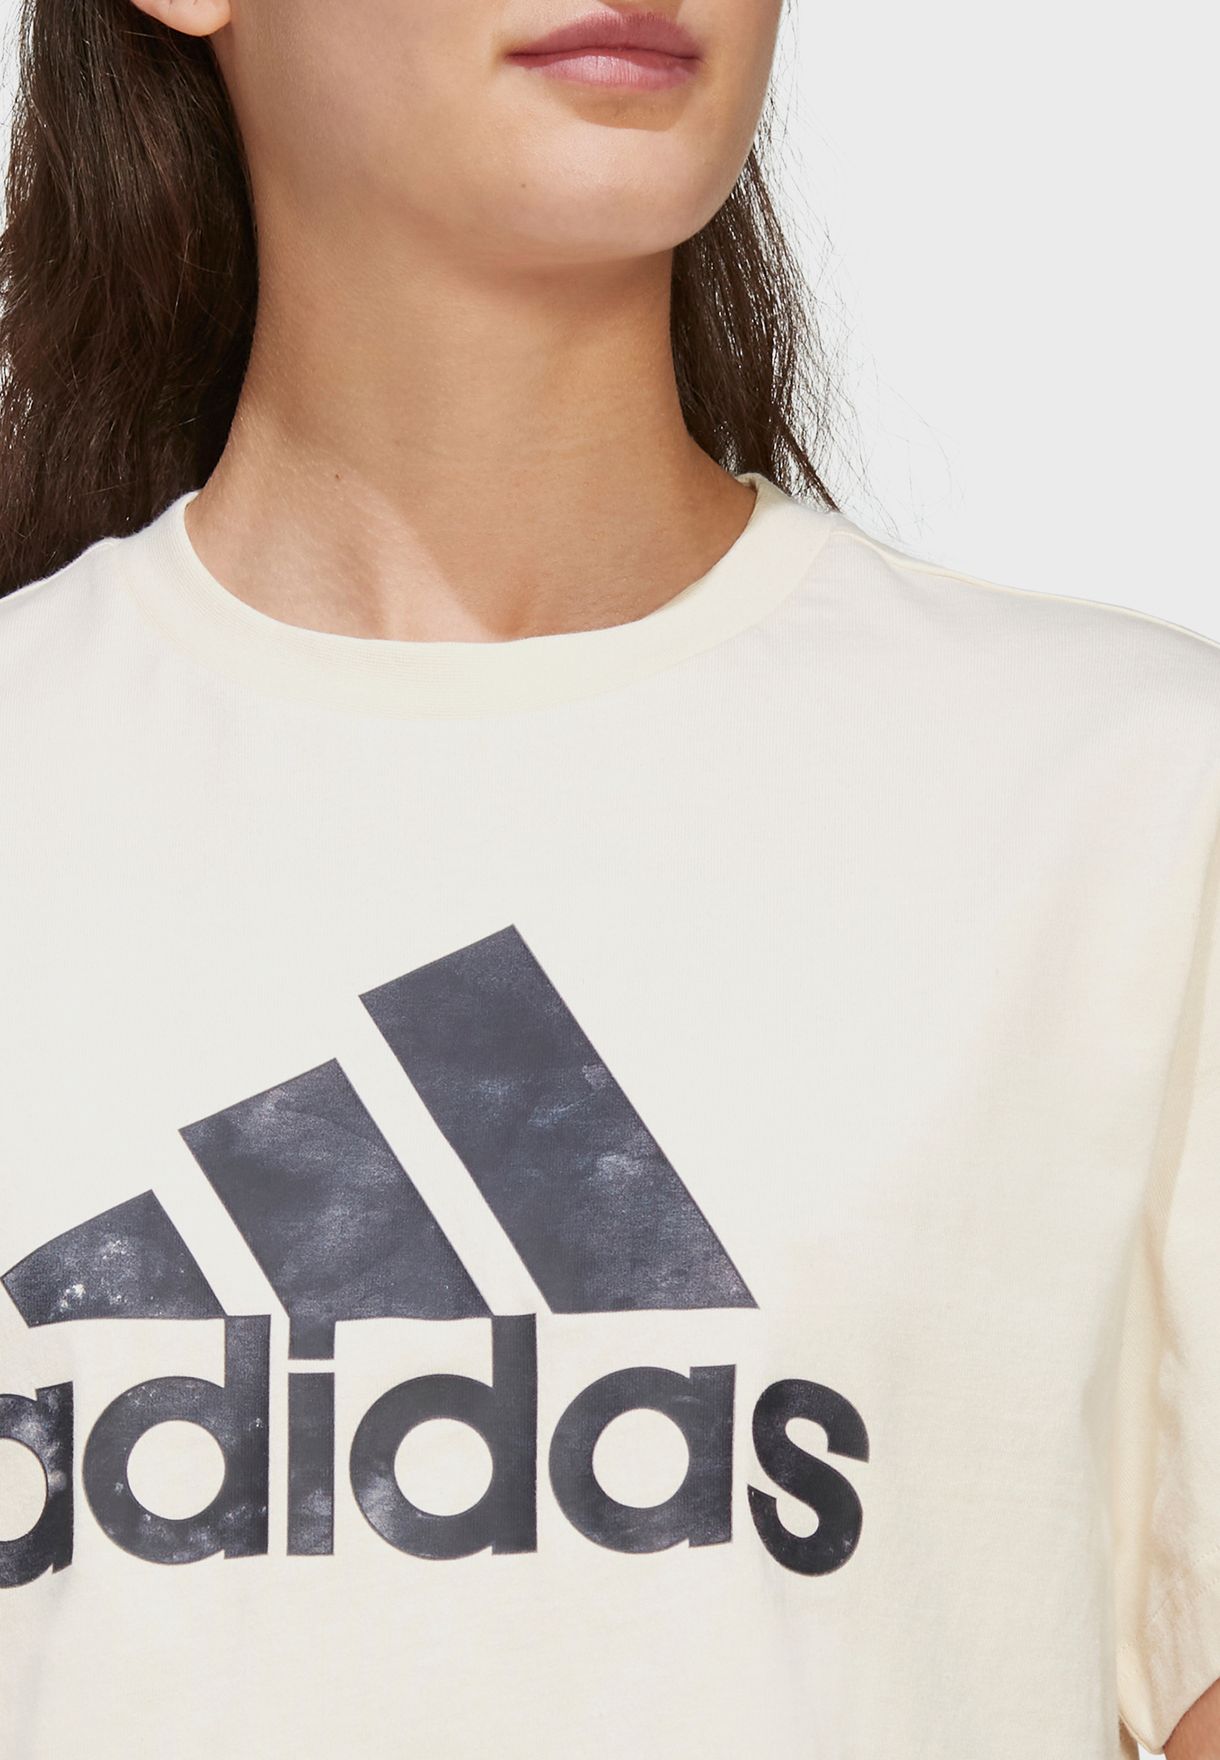 Adidas X Zoe Saldana Graphic T-Shirt